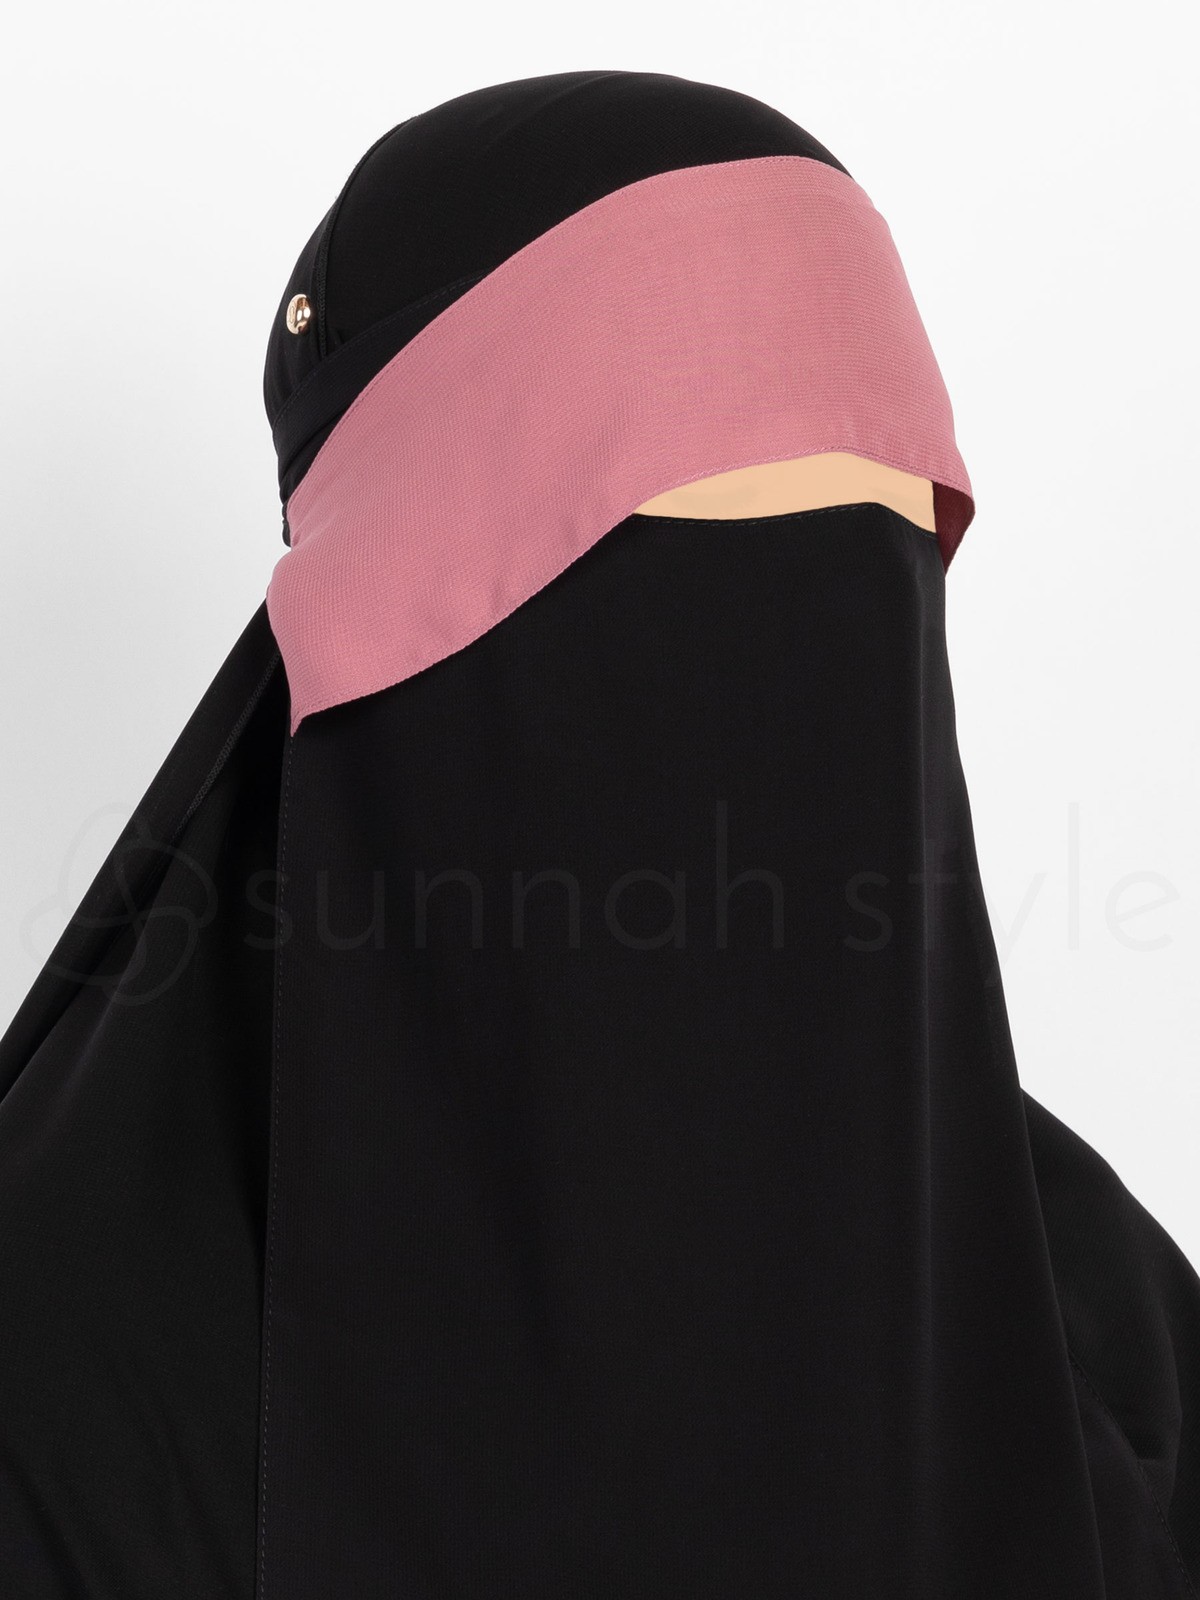 Sunnah Style - Adjustable Niqab Flap (Desert Rose)